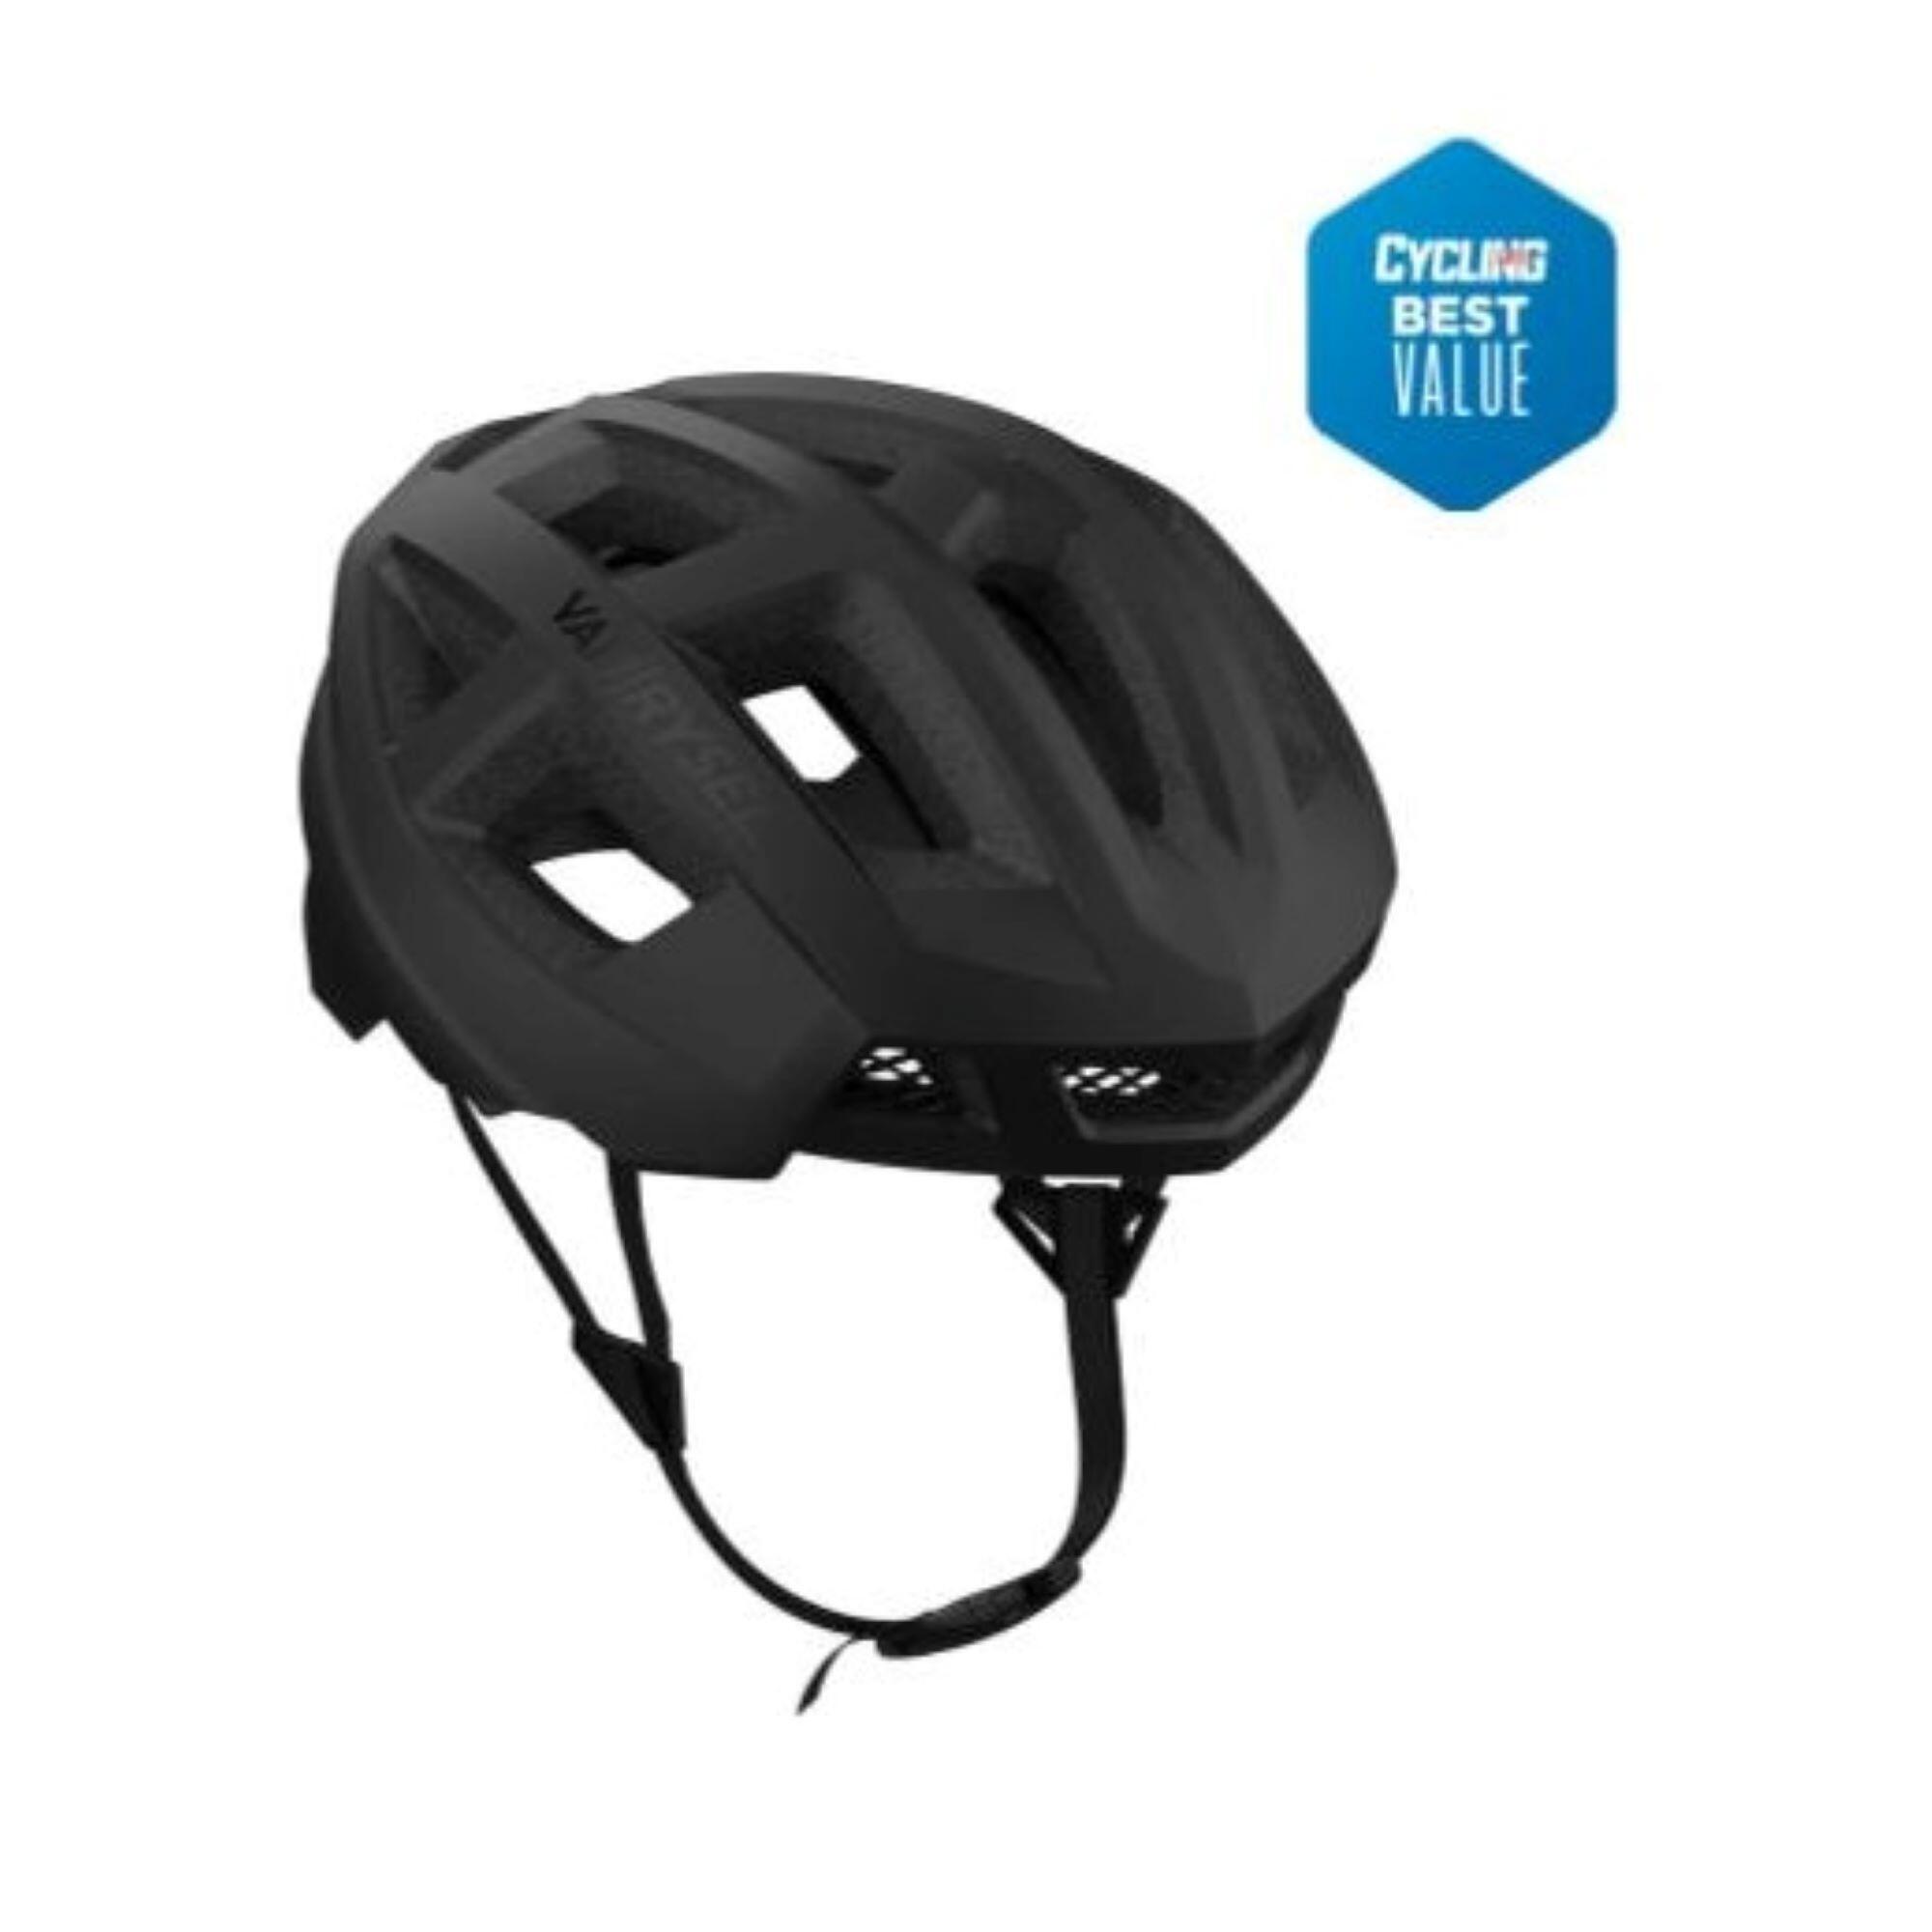 Racer Cycling Helmet - Black 7/7